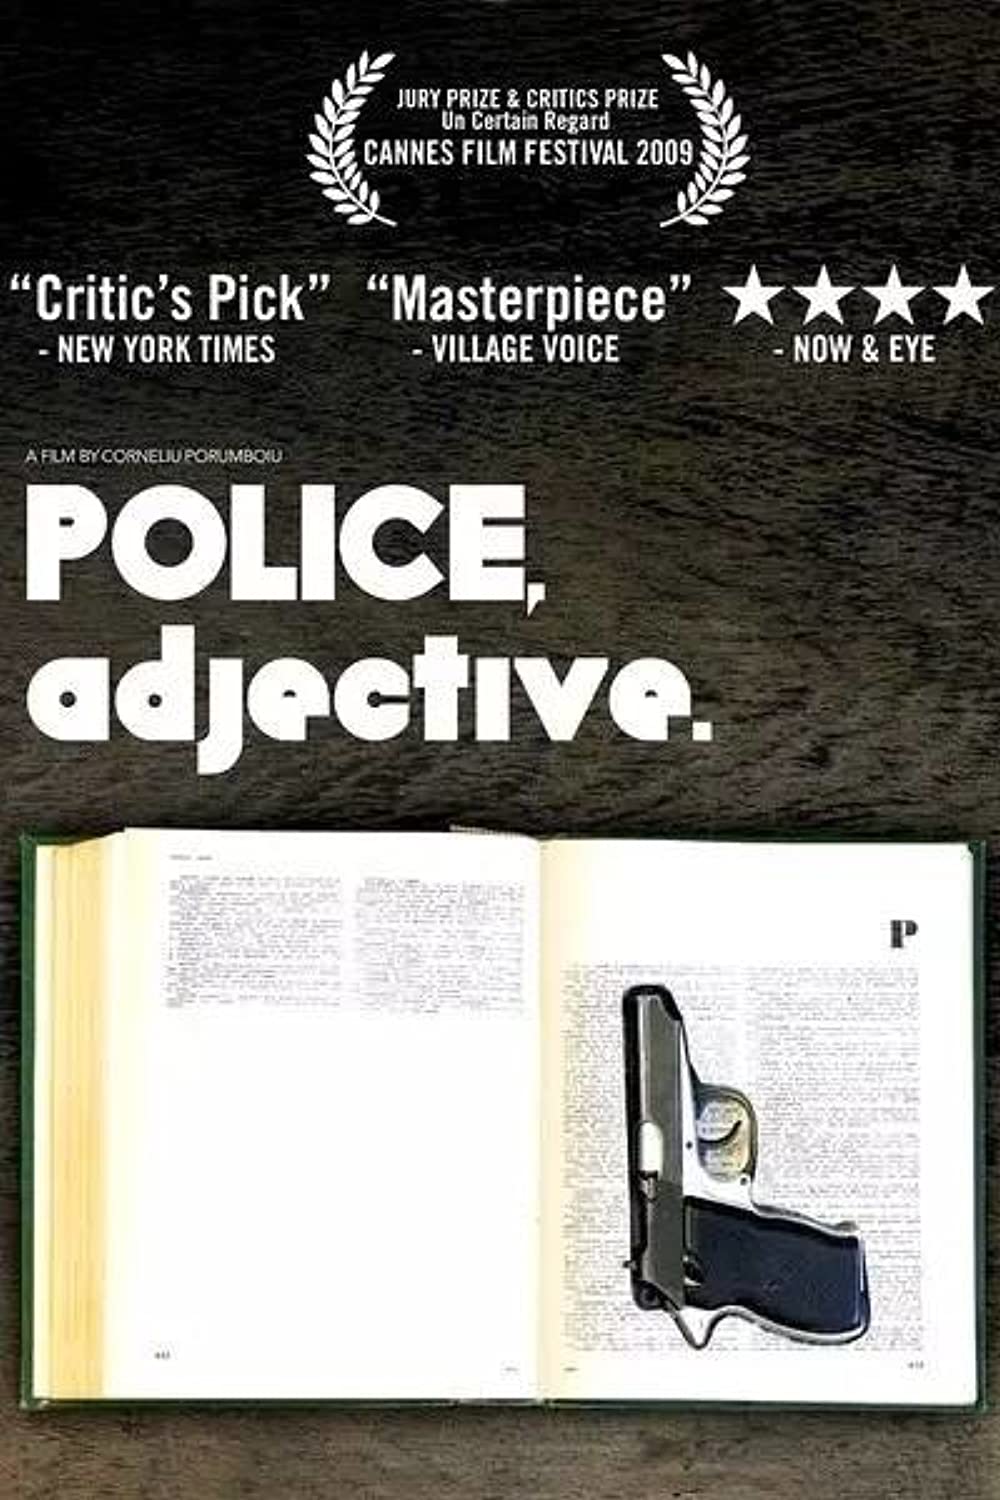 Download Politist, adjectiv Movie | Download Politist, Adjectiv Movie Review